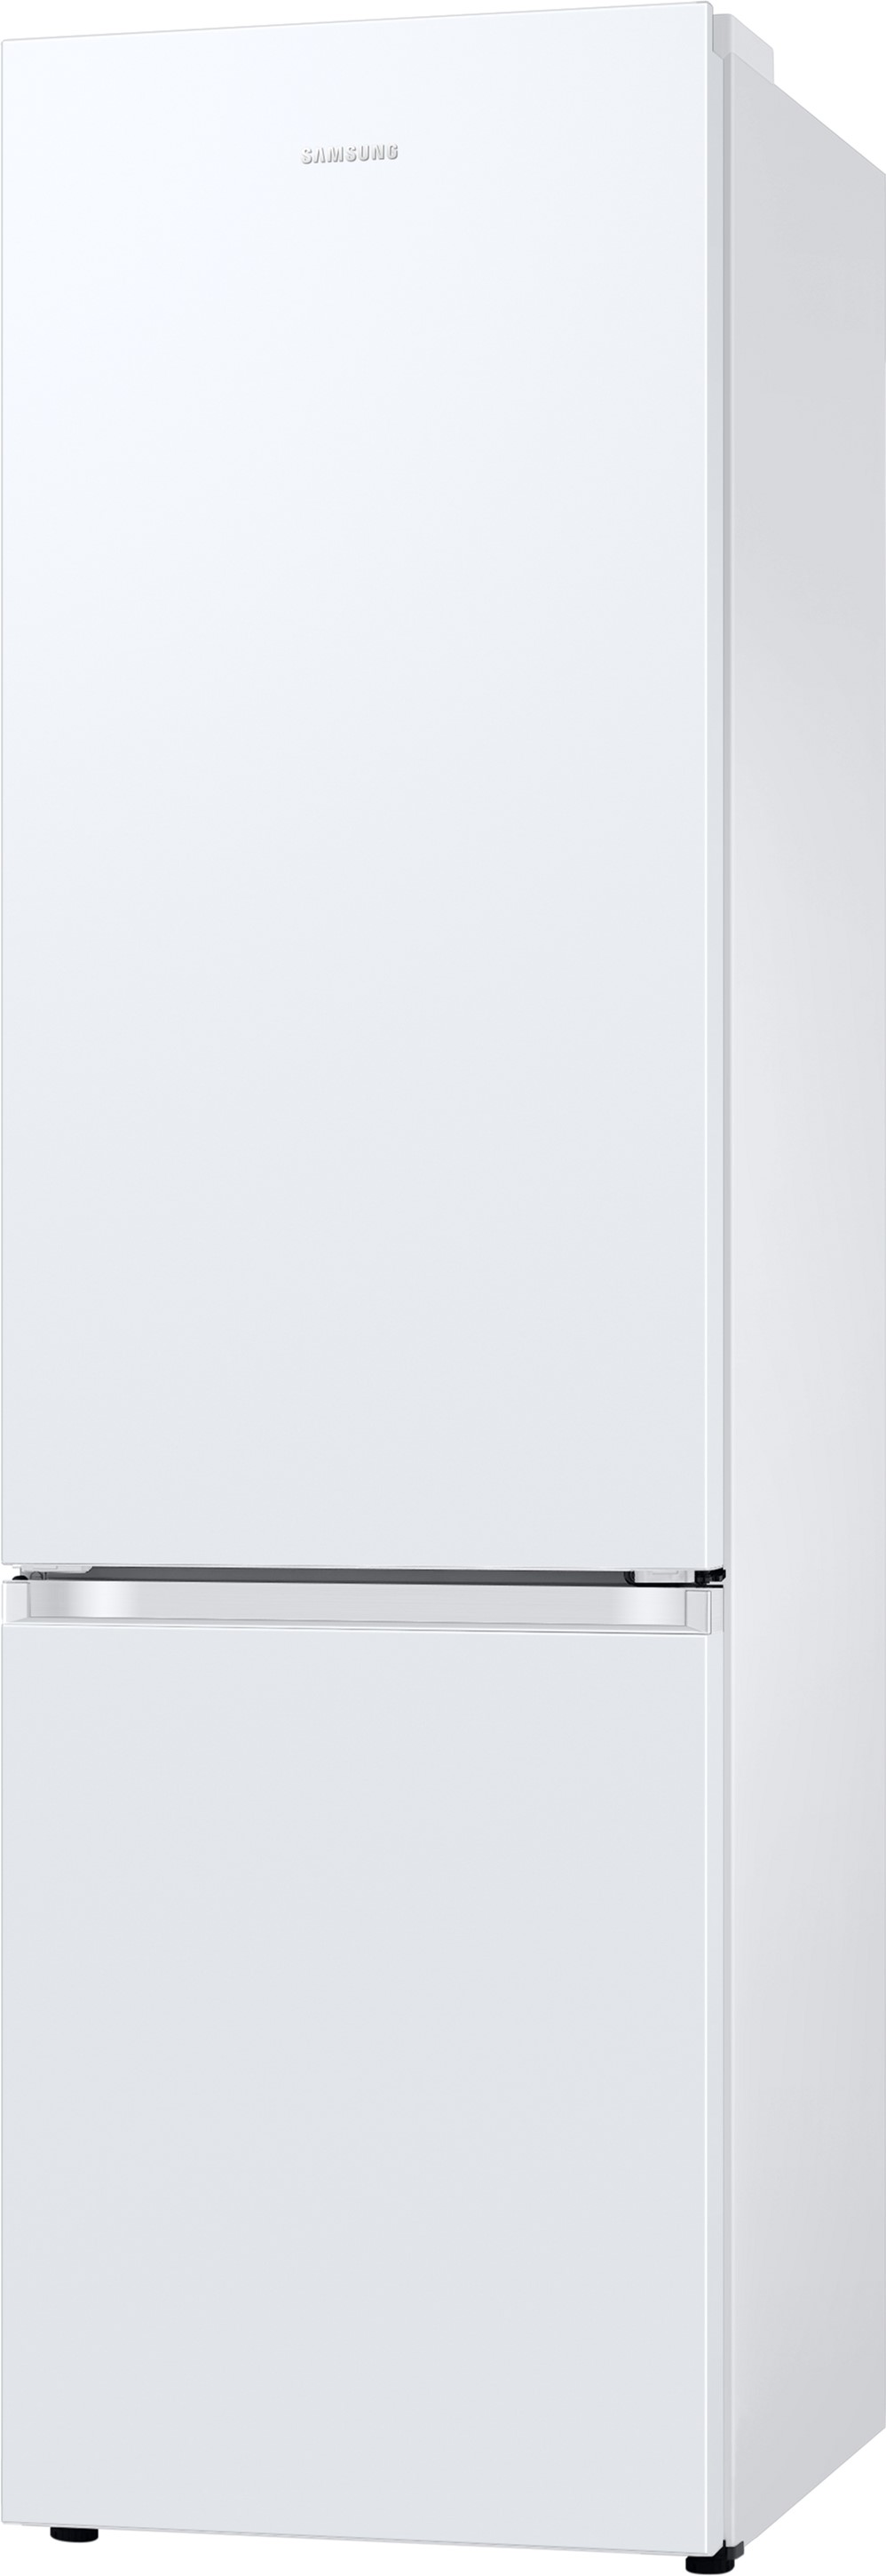 Холодильник Samsung RB38C603EWW/UA цена 27799 грн - фотография 2